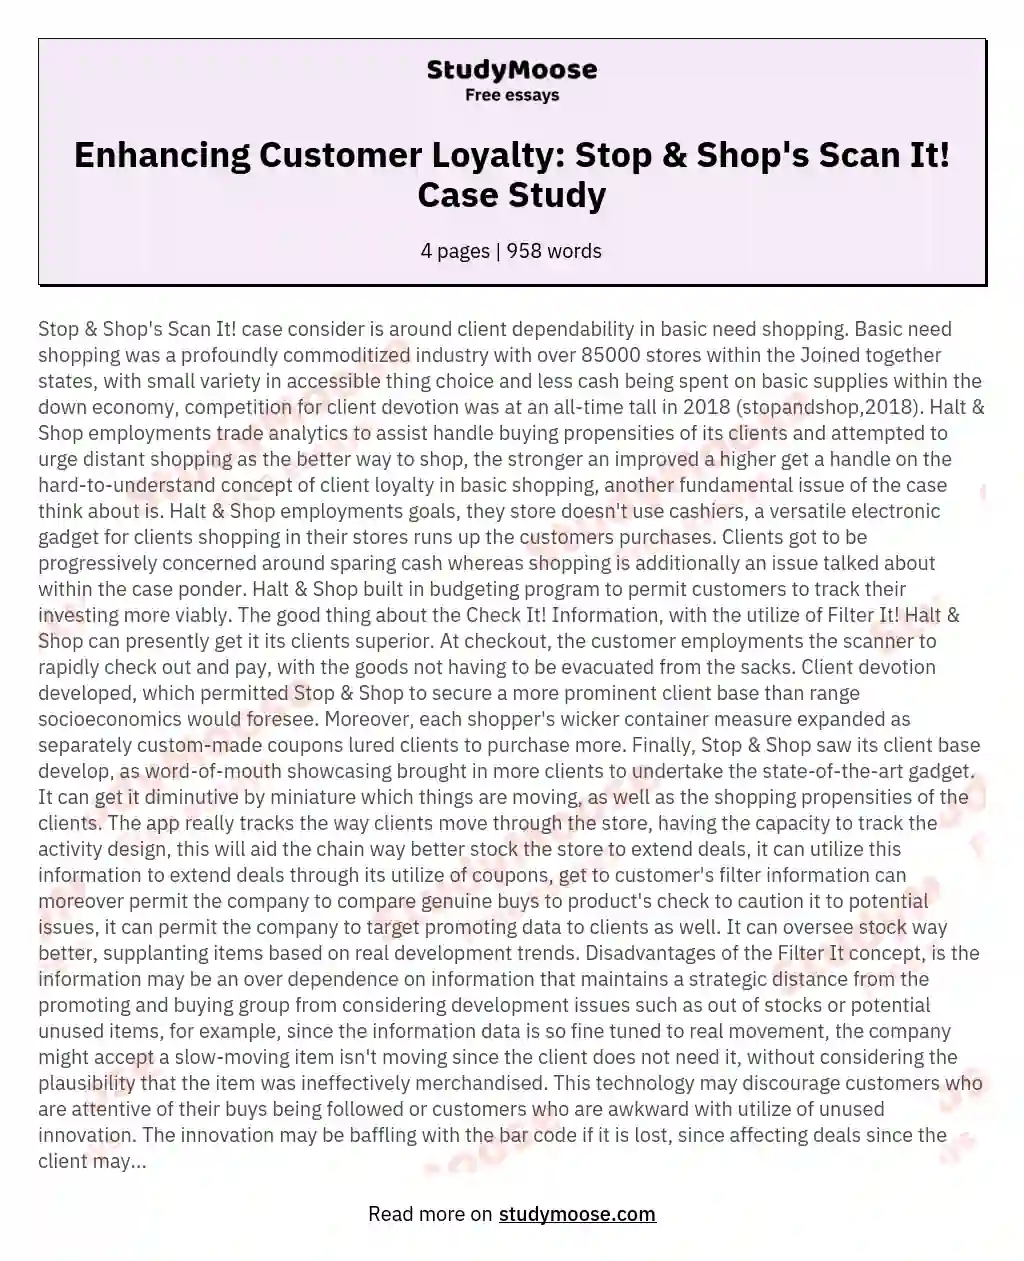 Enhancing Customer Loyalty: Stop & Shop's Scan It! Case Study essay